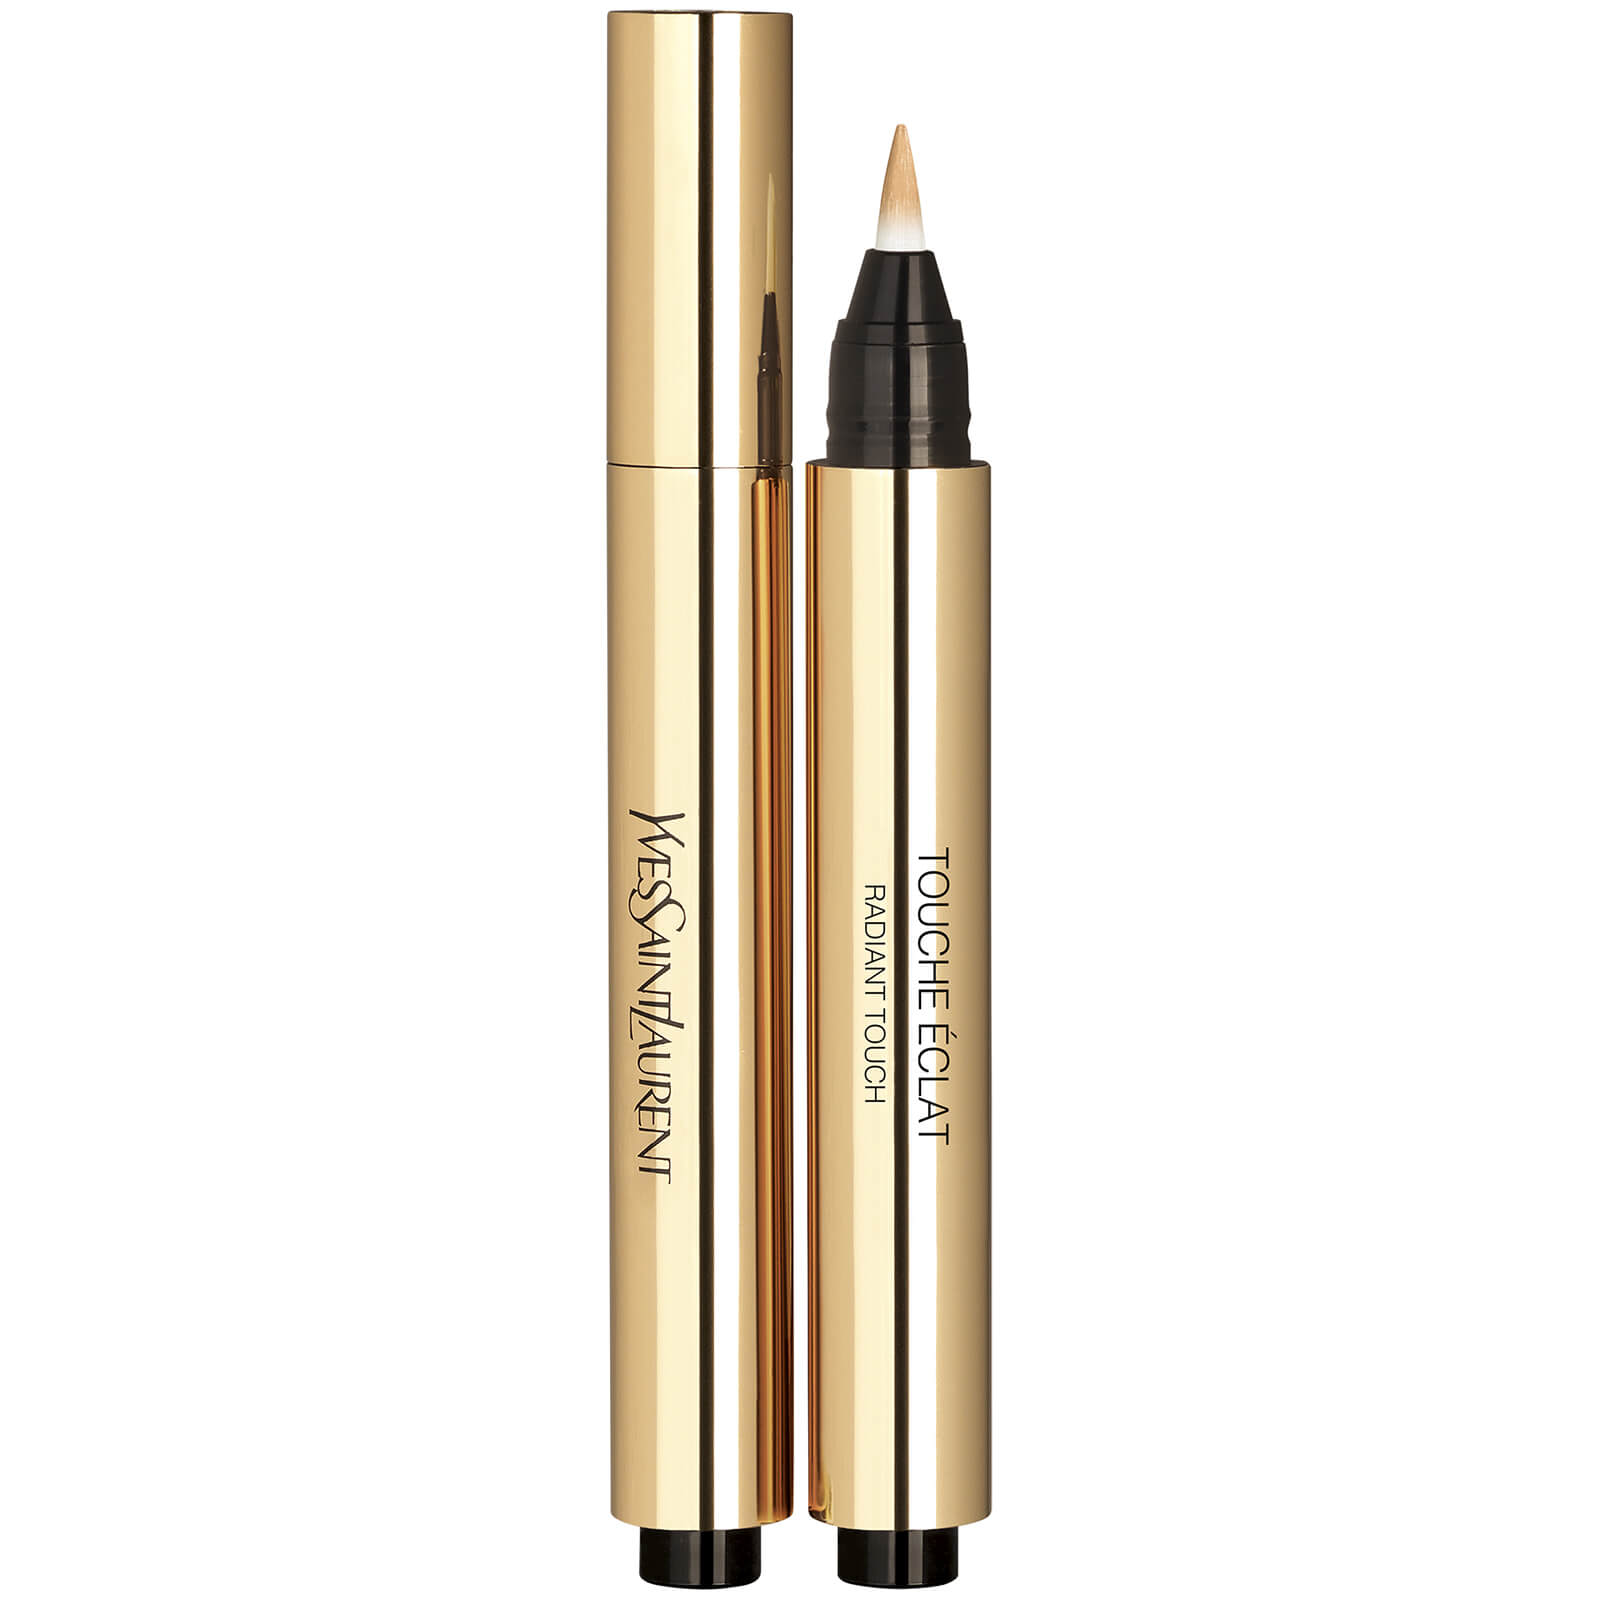 Yves Saint Laurent Touche Eclat Highlighter Pen 2.5ml (Various Shades) - 2 Lumious Ivory